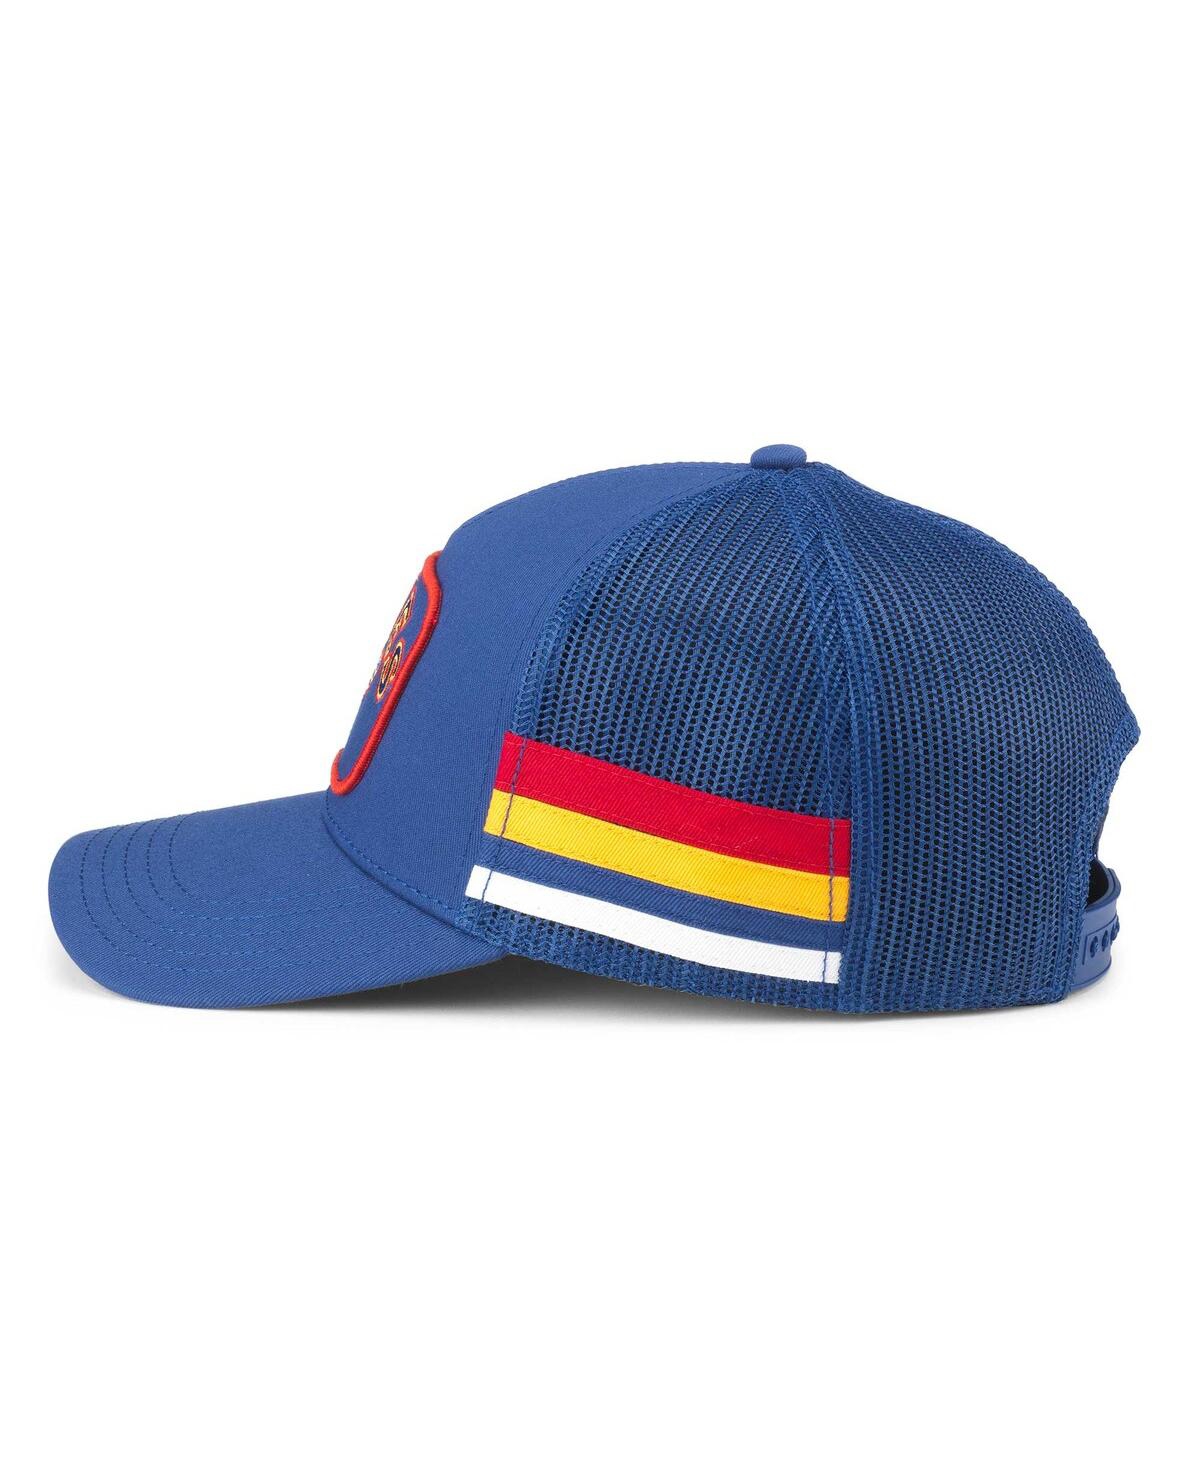 Shop American Needle Men's  Blue St. Louis Blues Hotfoot Stripes Trucker Adjustable Hat